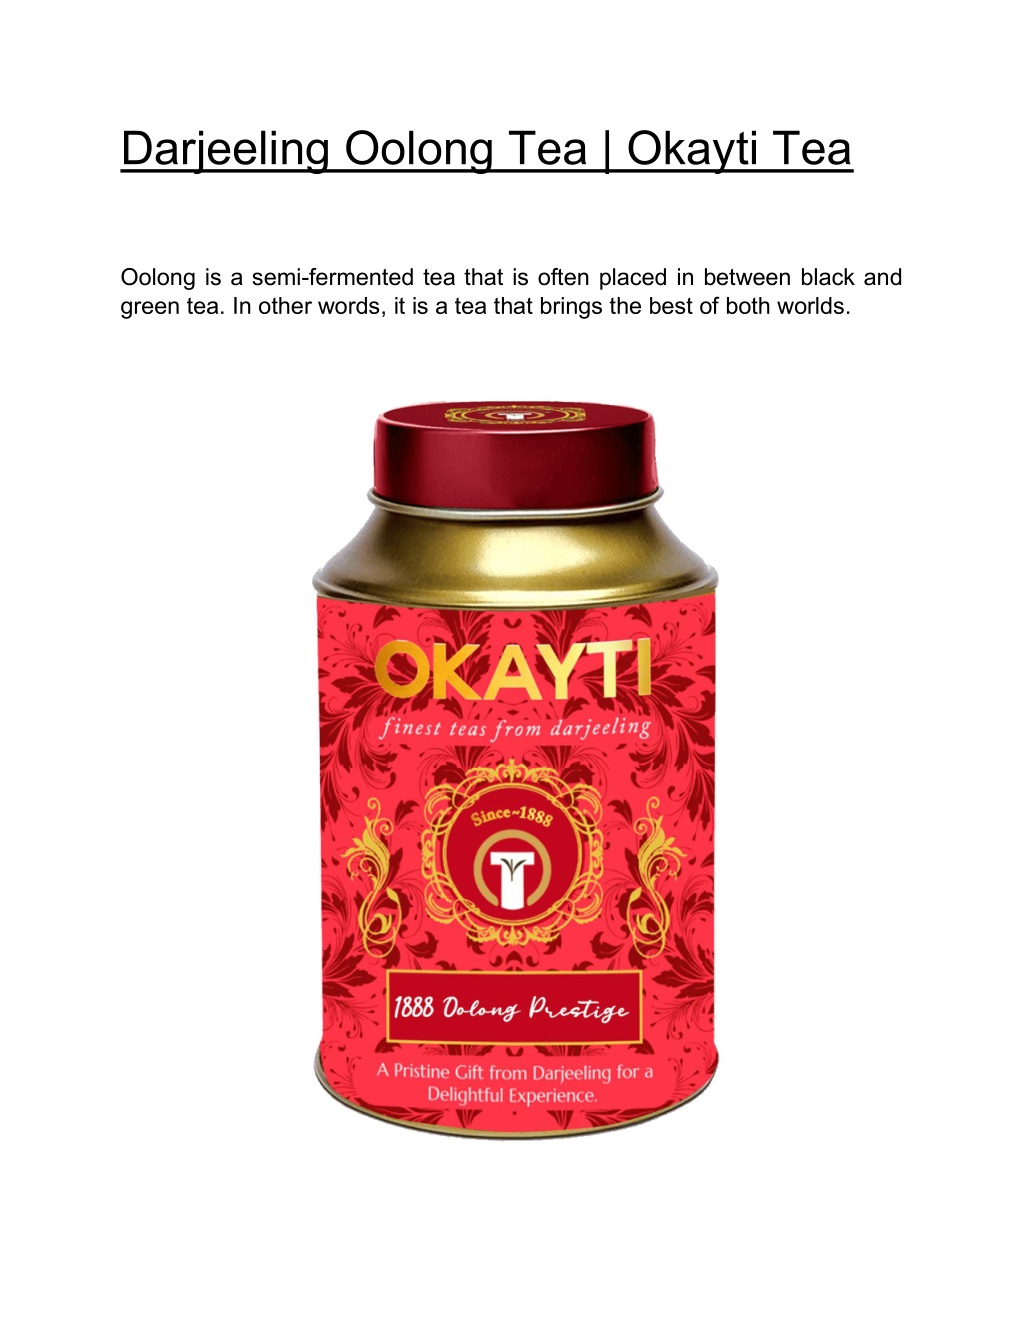 PPT - Darjeeling Oolong Tea | Okayti Tea PowerPoint Presentation, free ...